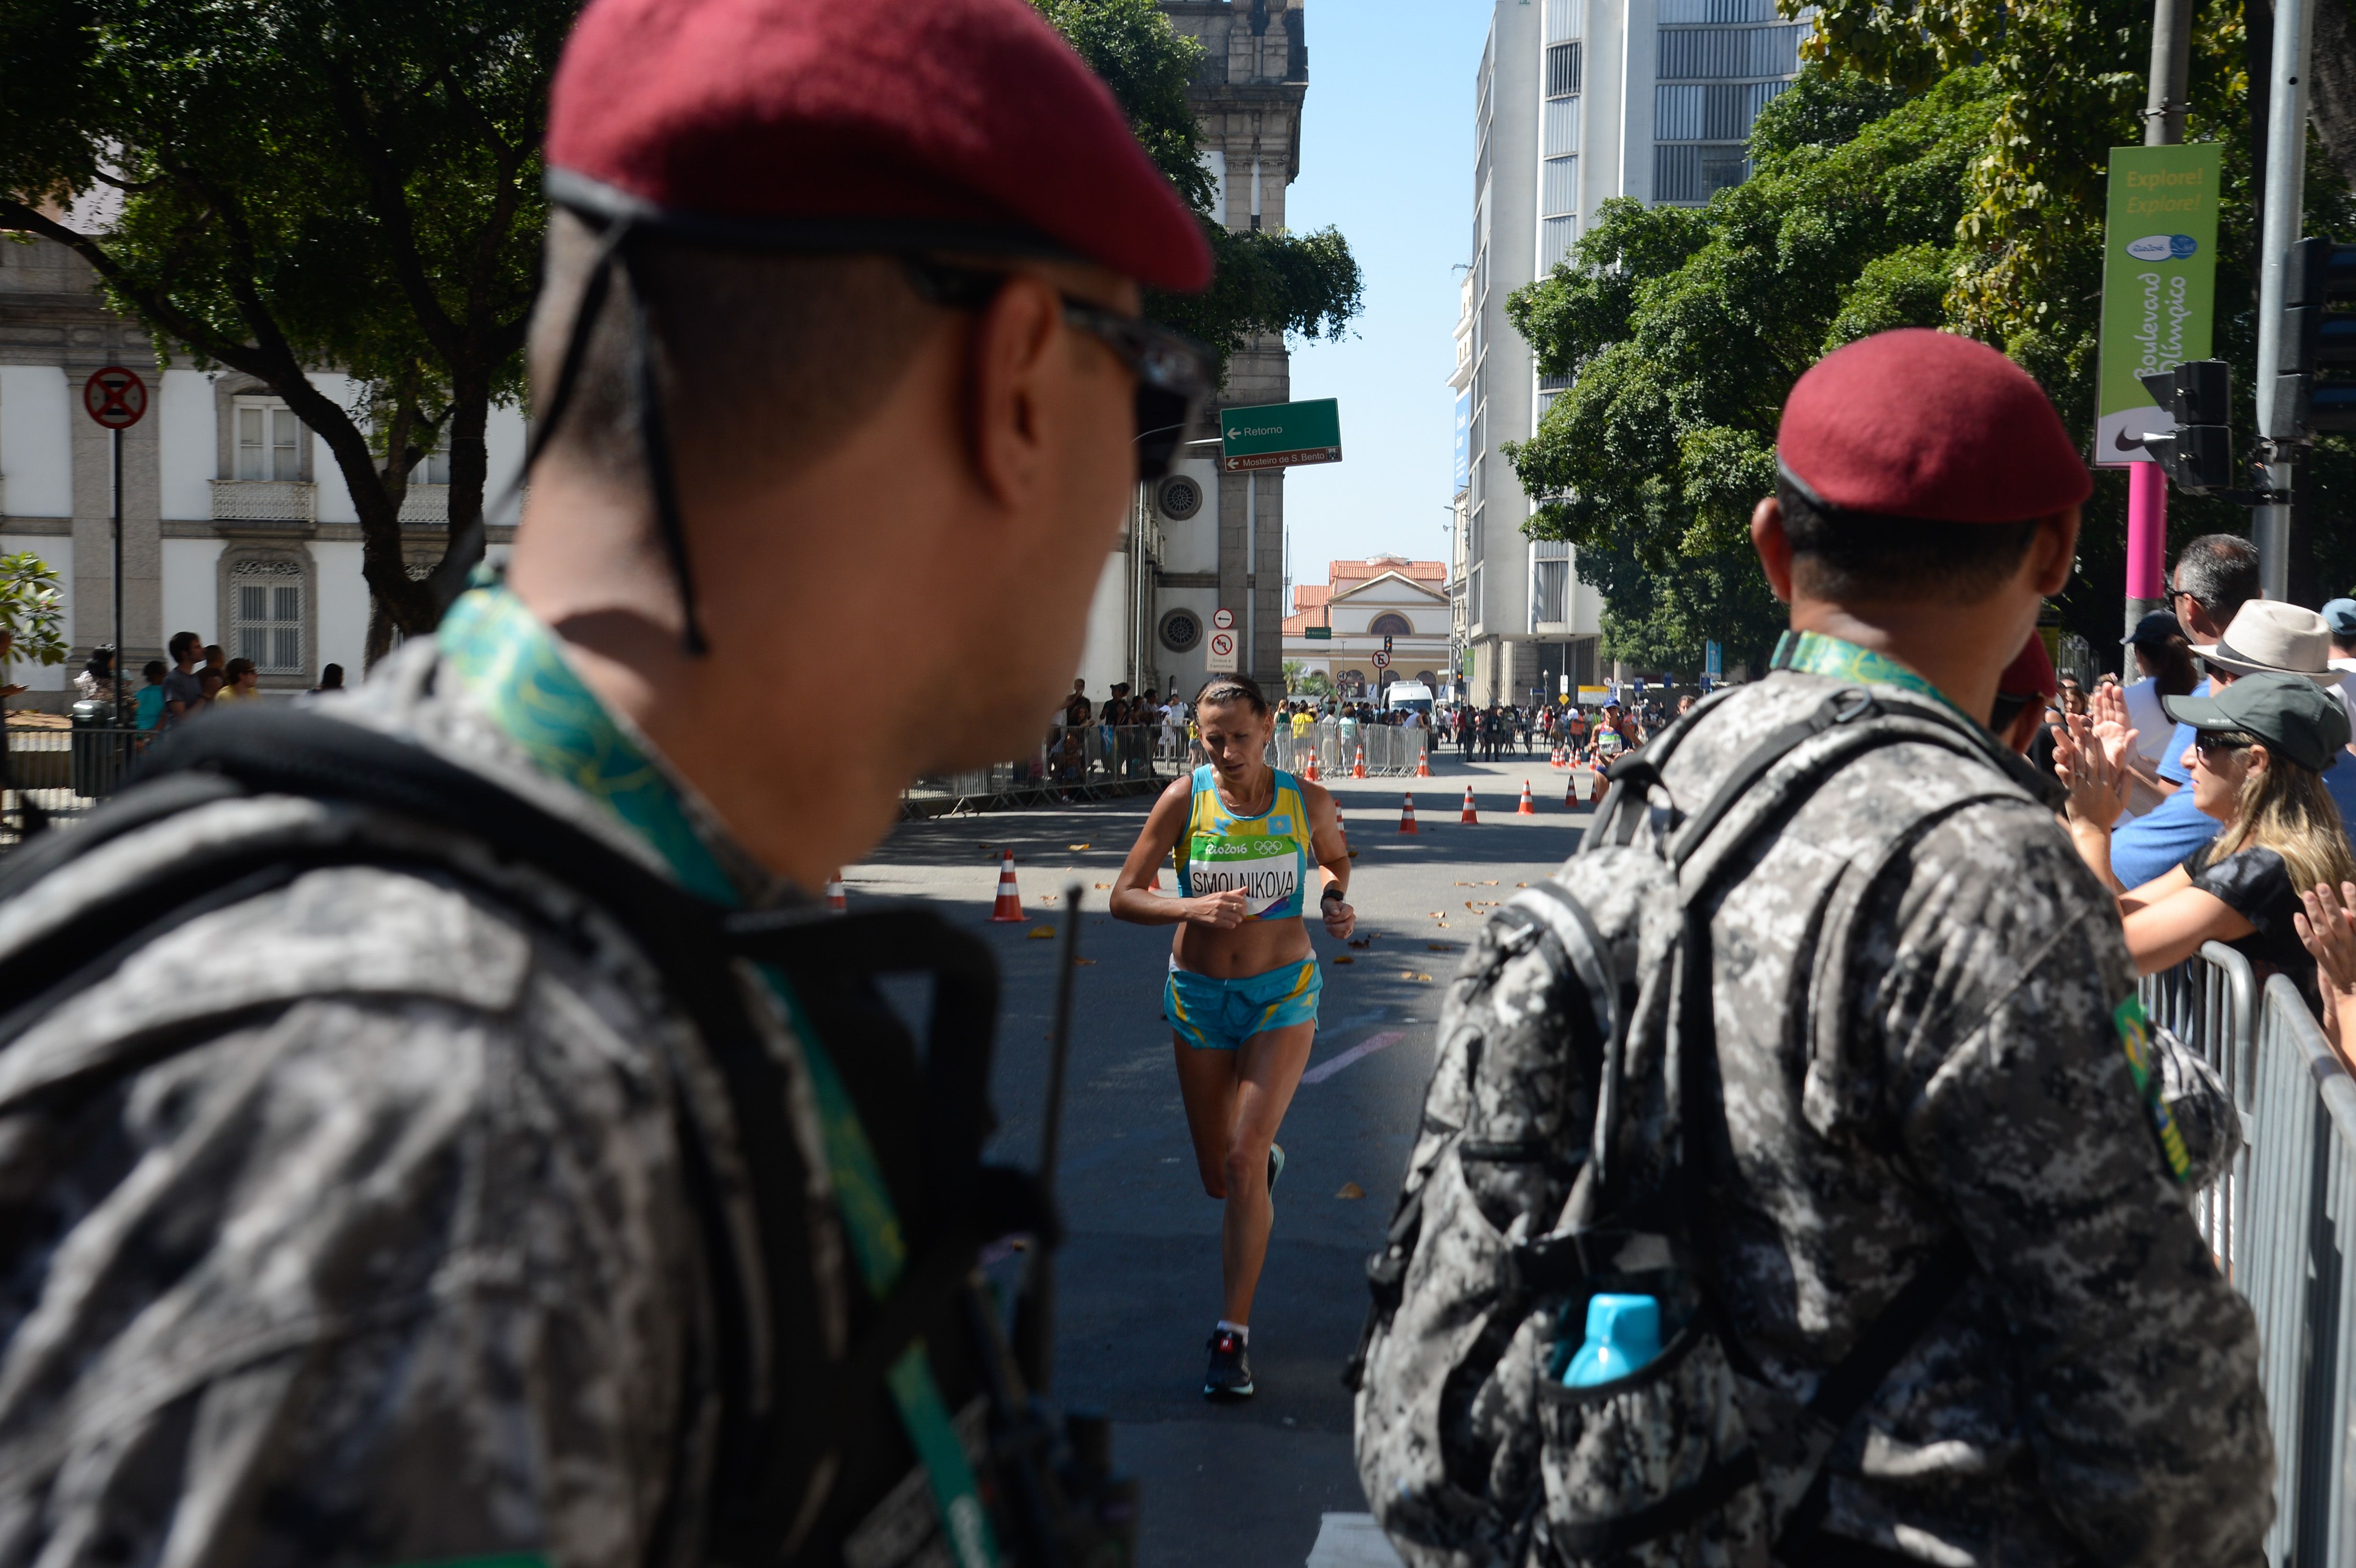 Security guards watch the Women's marathon at the Rio 2016 Summer Olympics. (Tânia Rêgo/Agência Brasil)